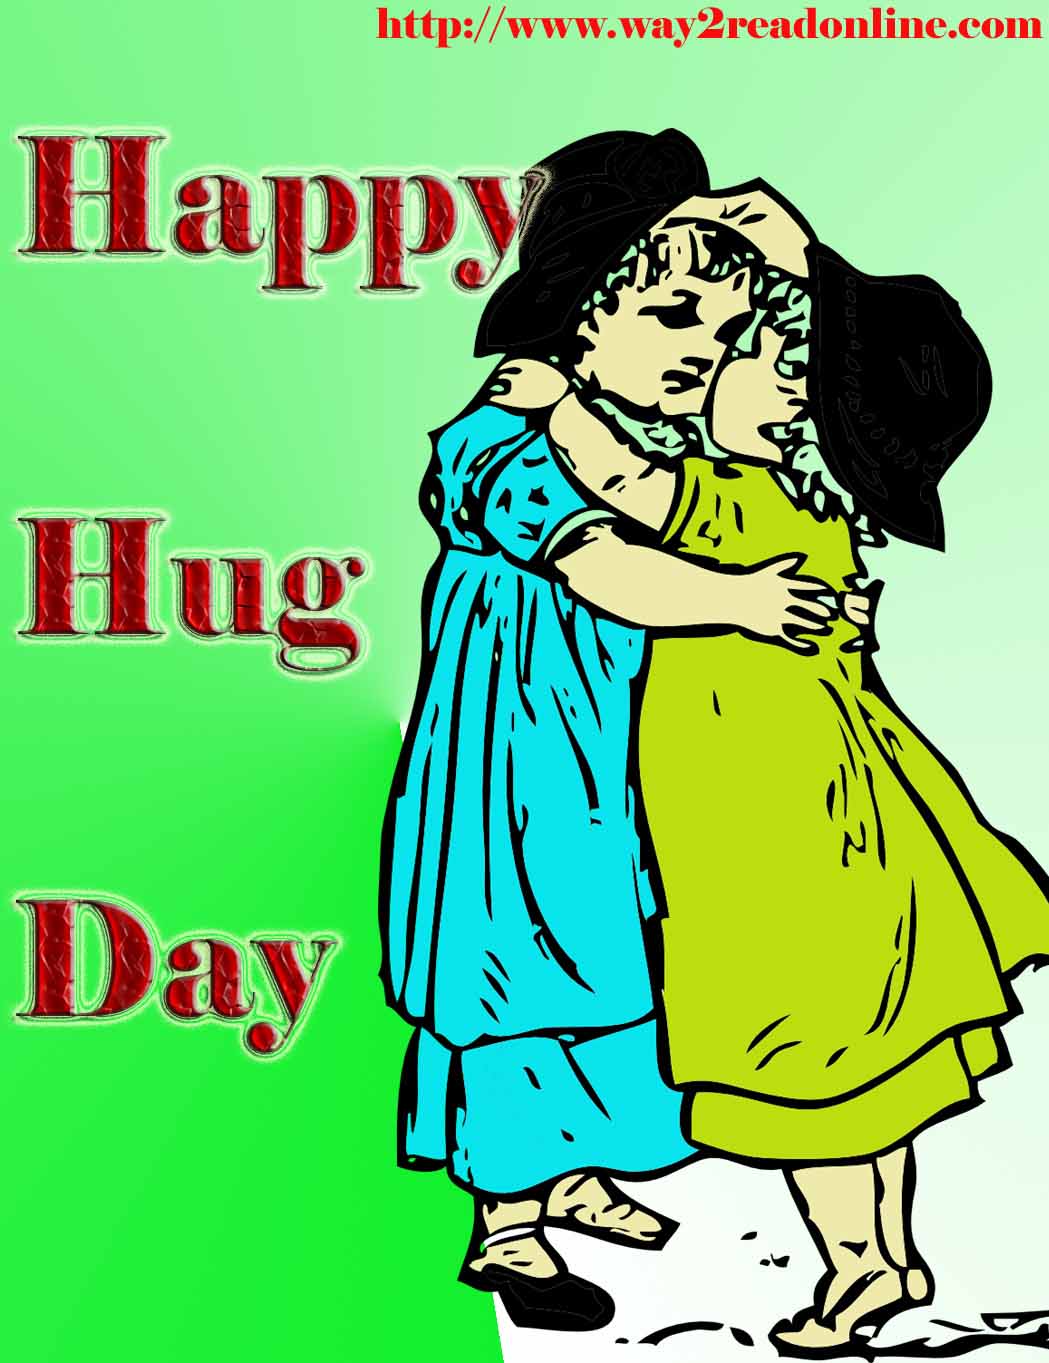 hug day hd wallpapers,poster,cartoon,interaction,font,illustration